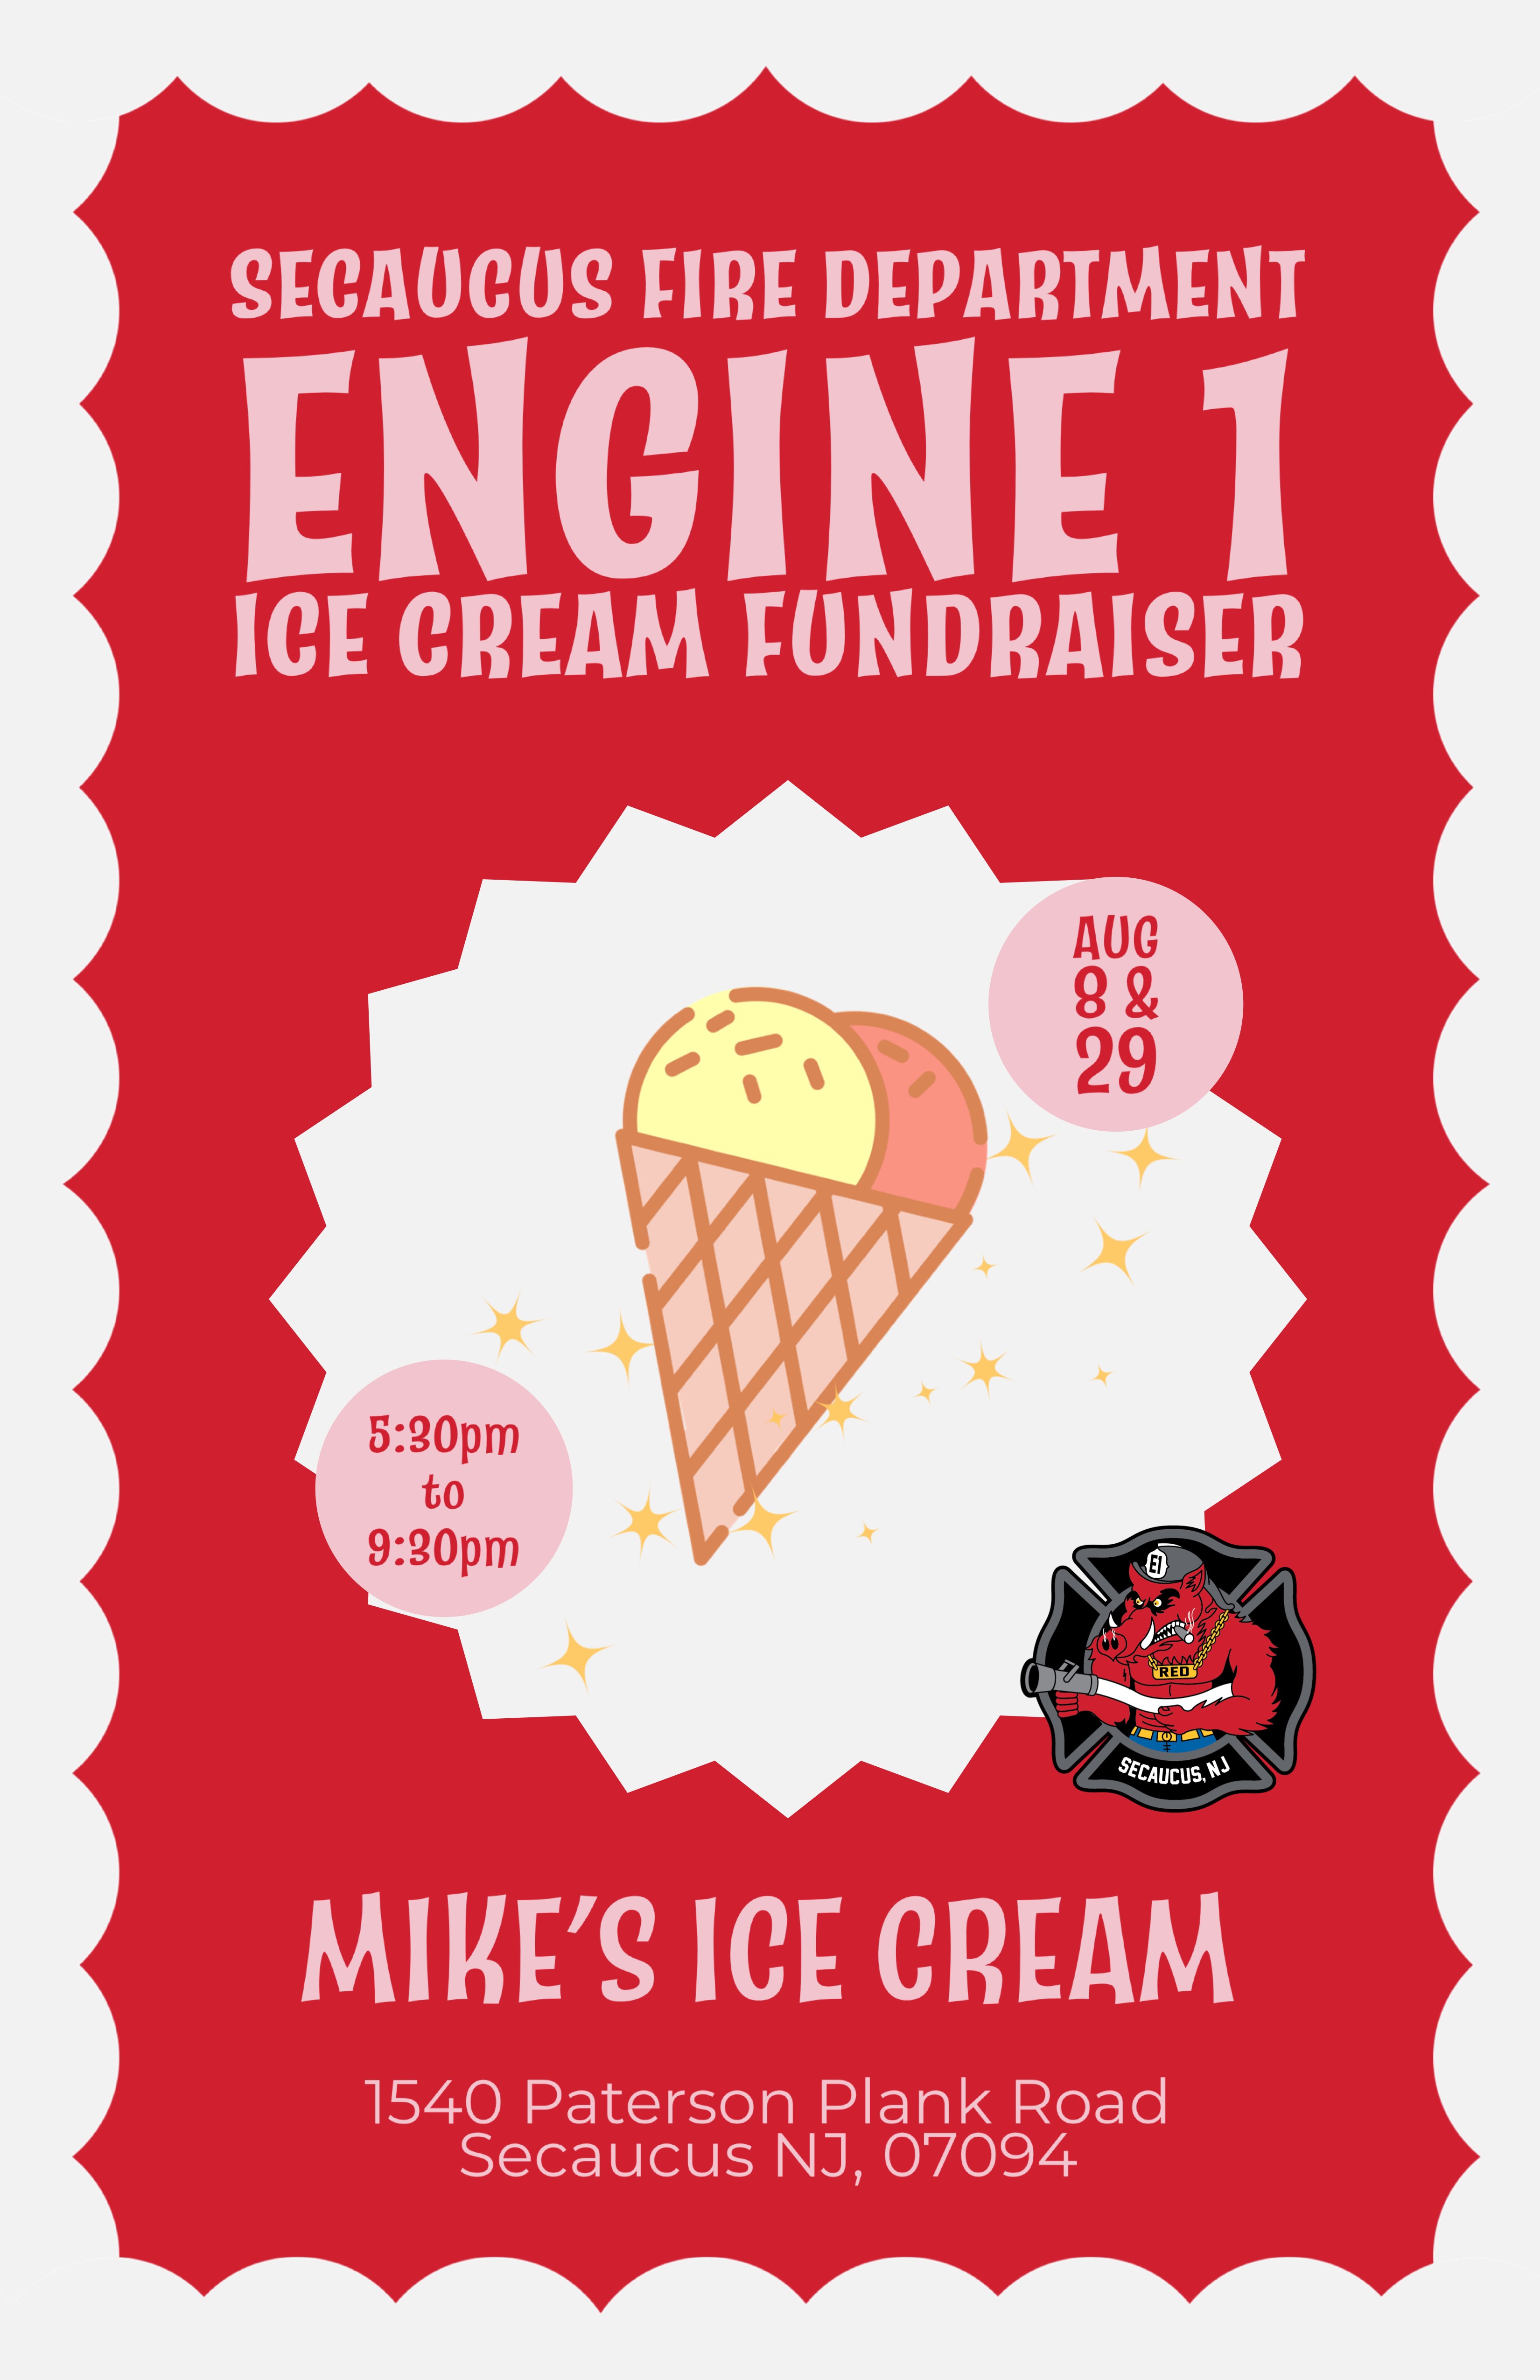 Fire Department Ice Cream Fundraiser August